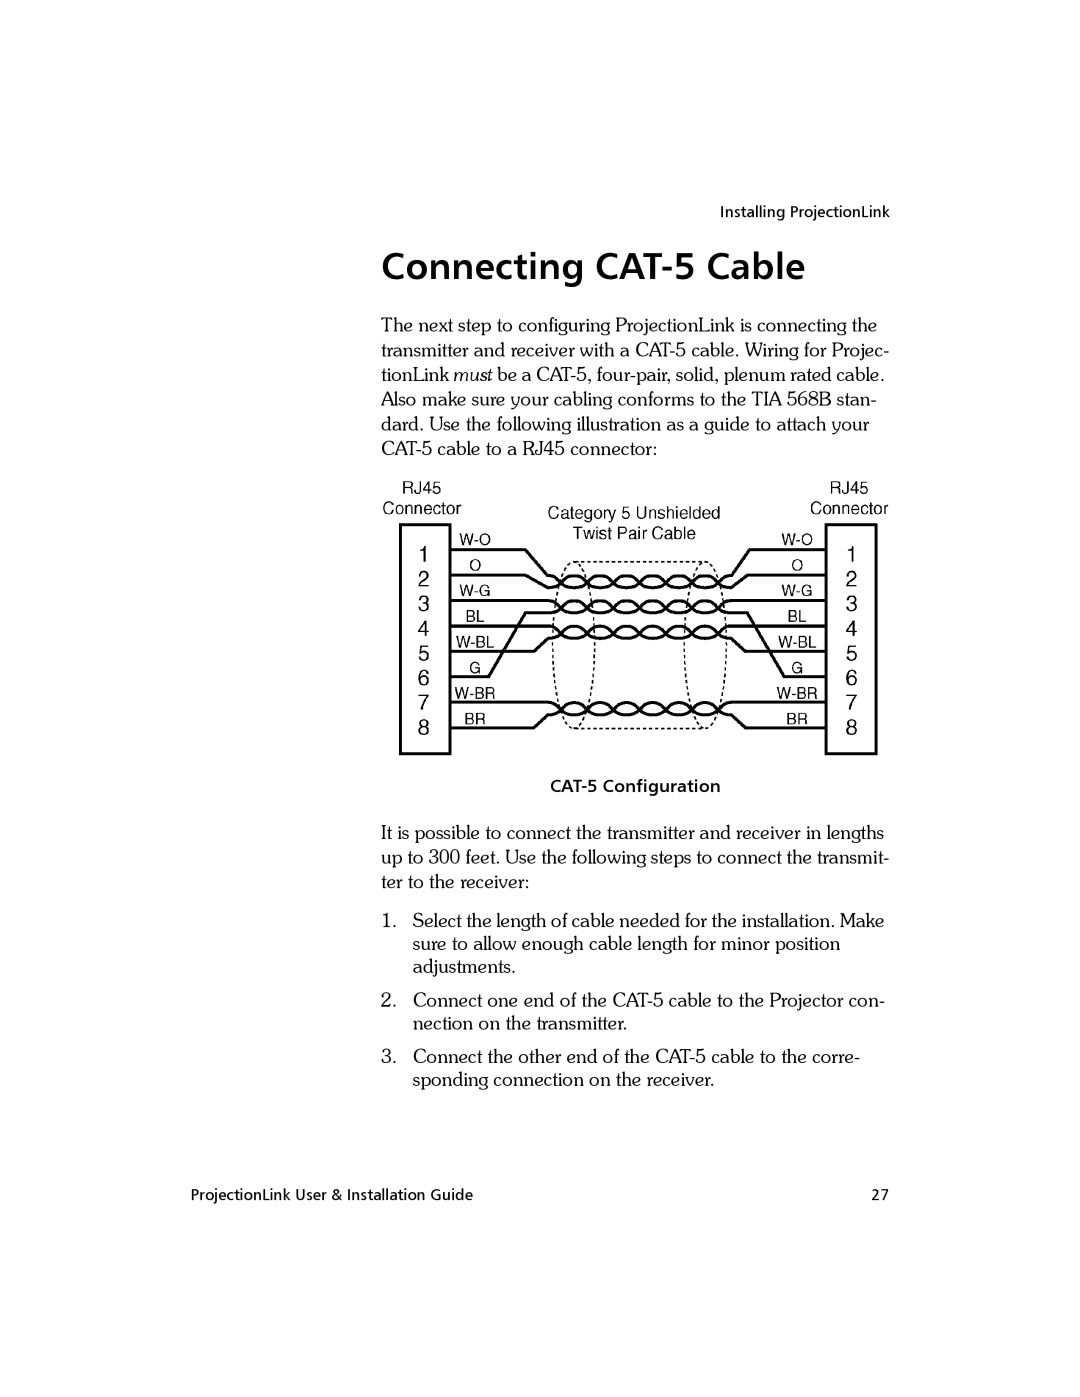 Proxima ASA PL-300E, BNDL-001 manual Connecting CAT-5 Cable, CAT-5 Configuration 